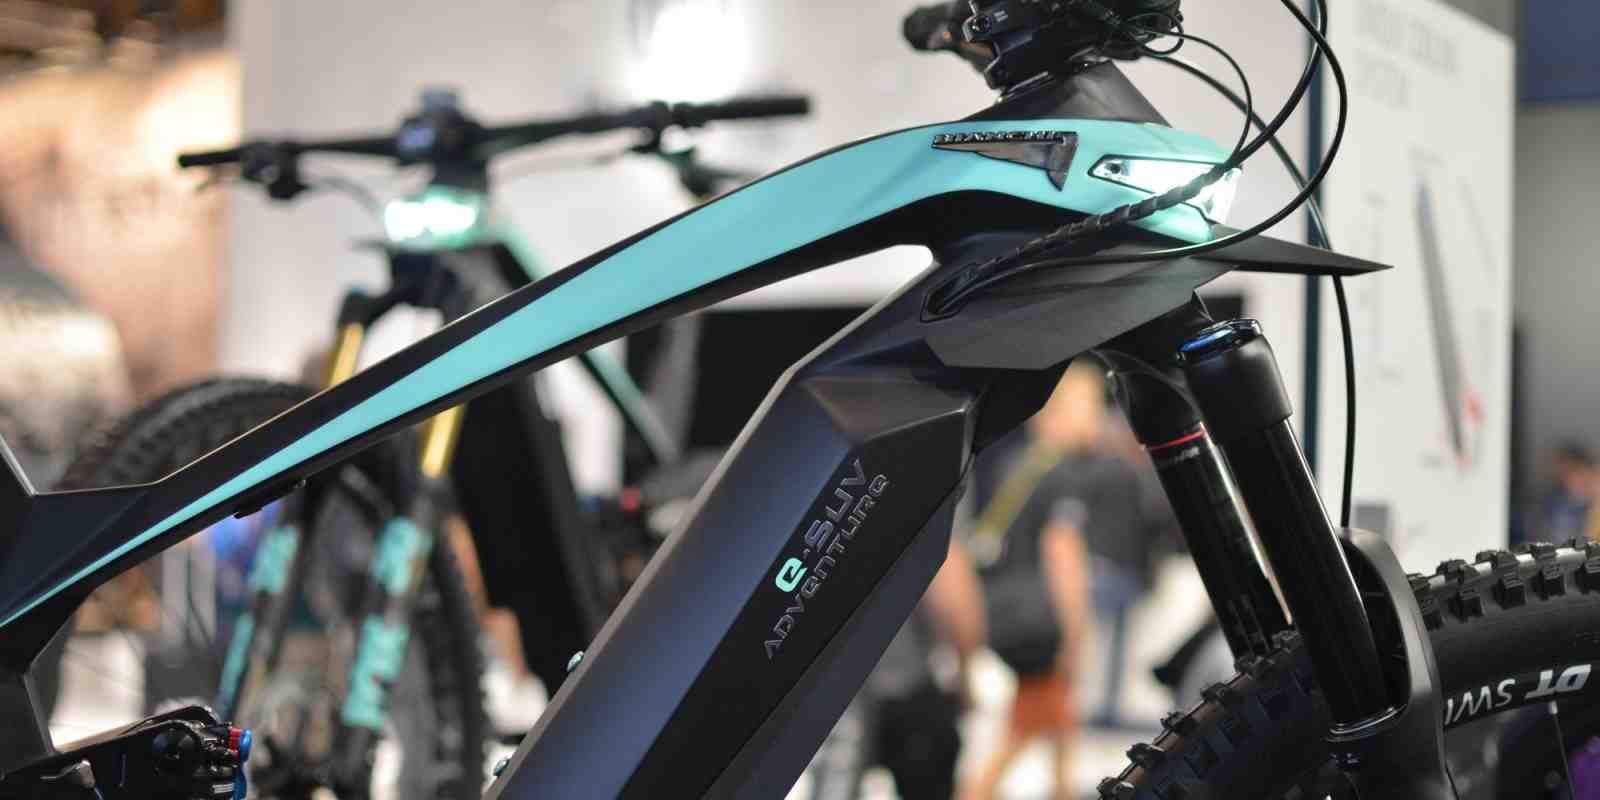 Is an electric bike worth it?